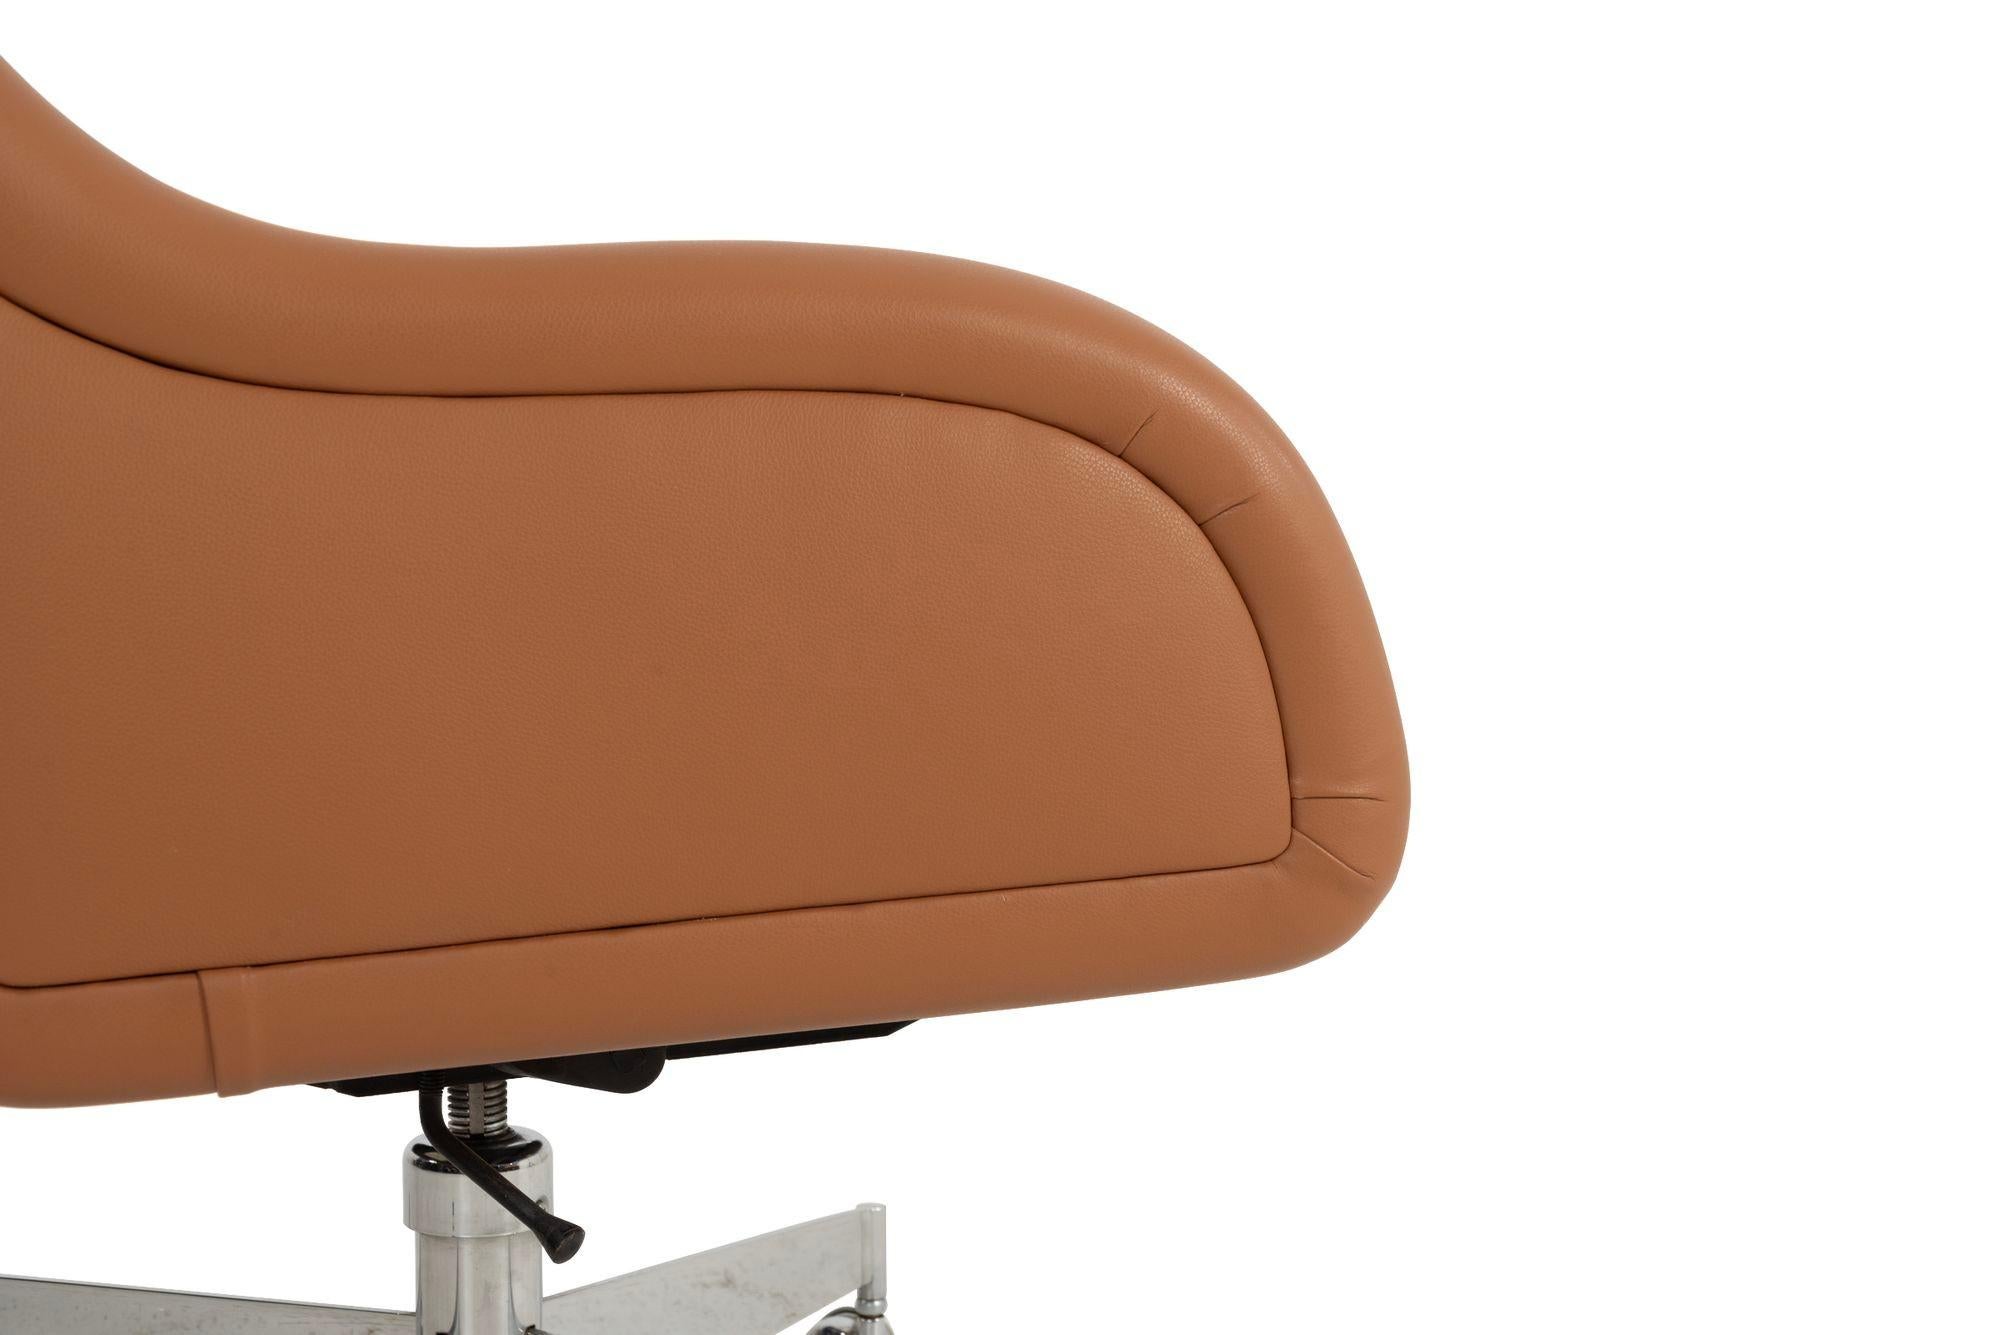 Leather Roger Sprunger for Dunbar Desk Chair For Sale